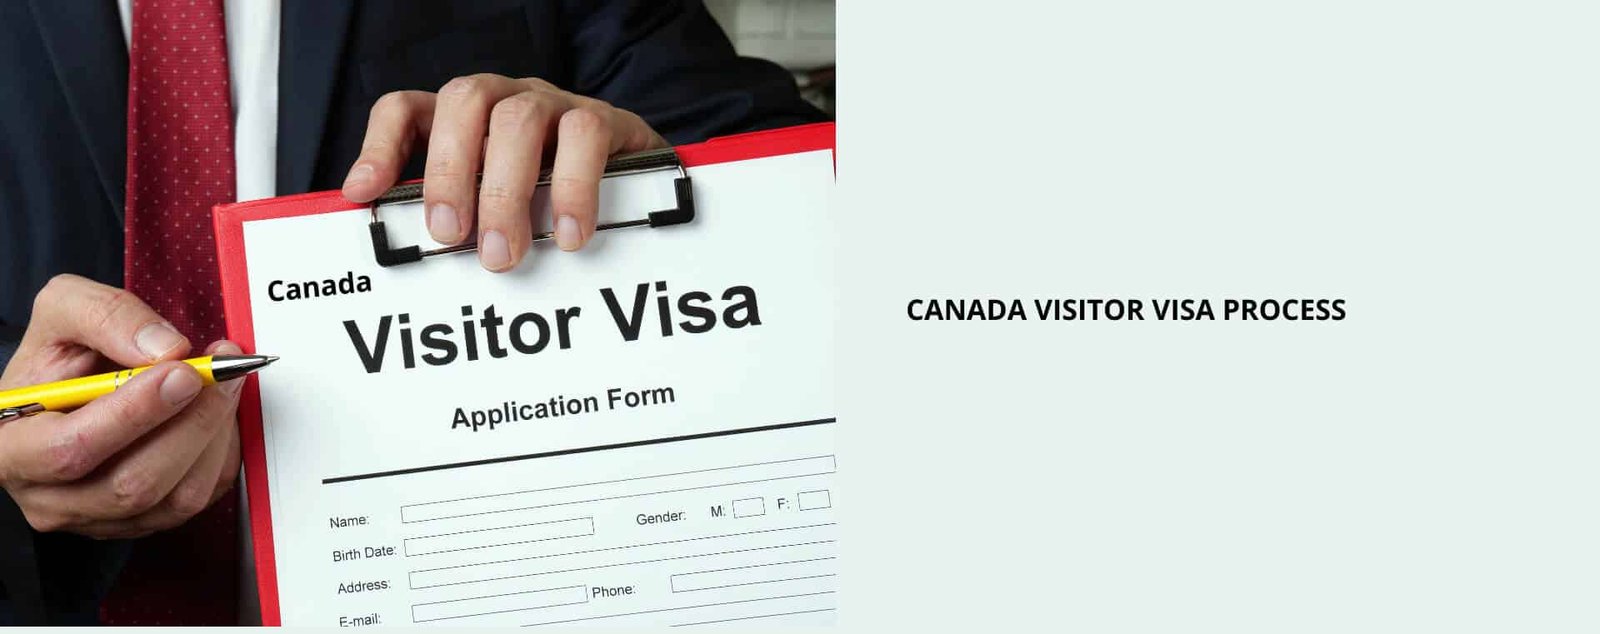 Visitor visa process form